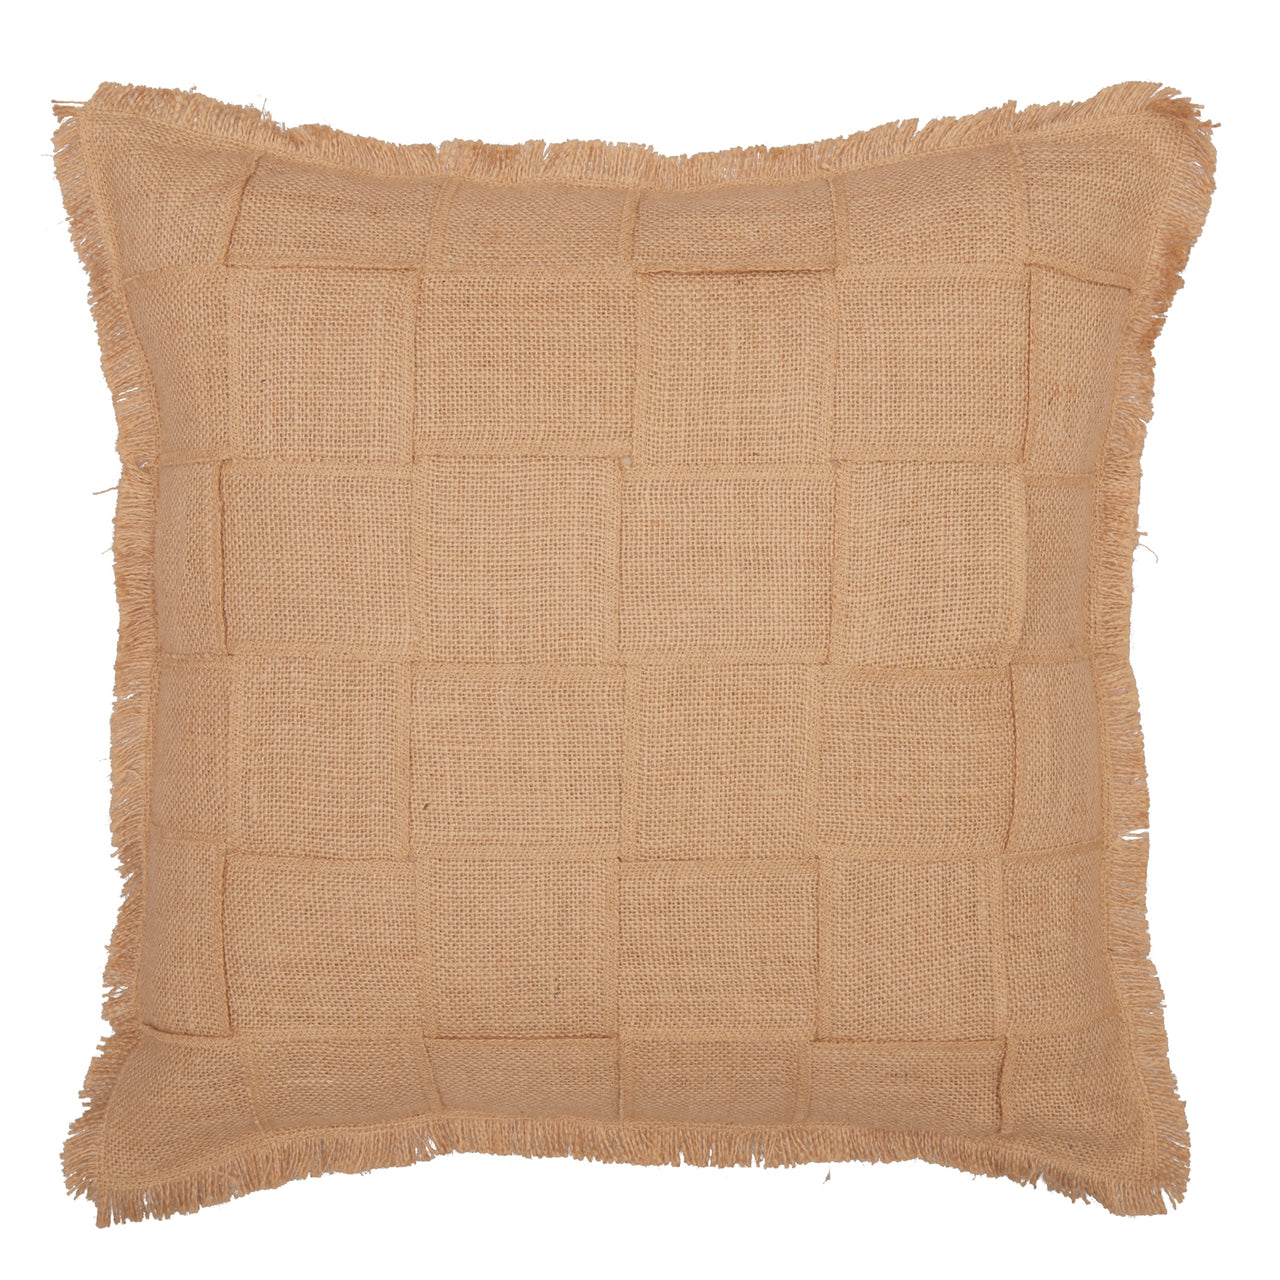 Jute Burlap Natural Basket Weave Pillow 18x18 VHC Brands